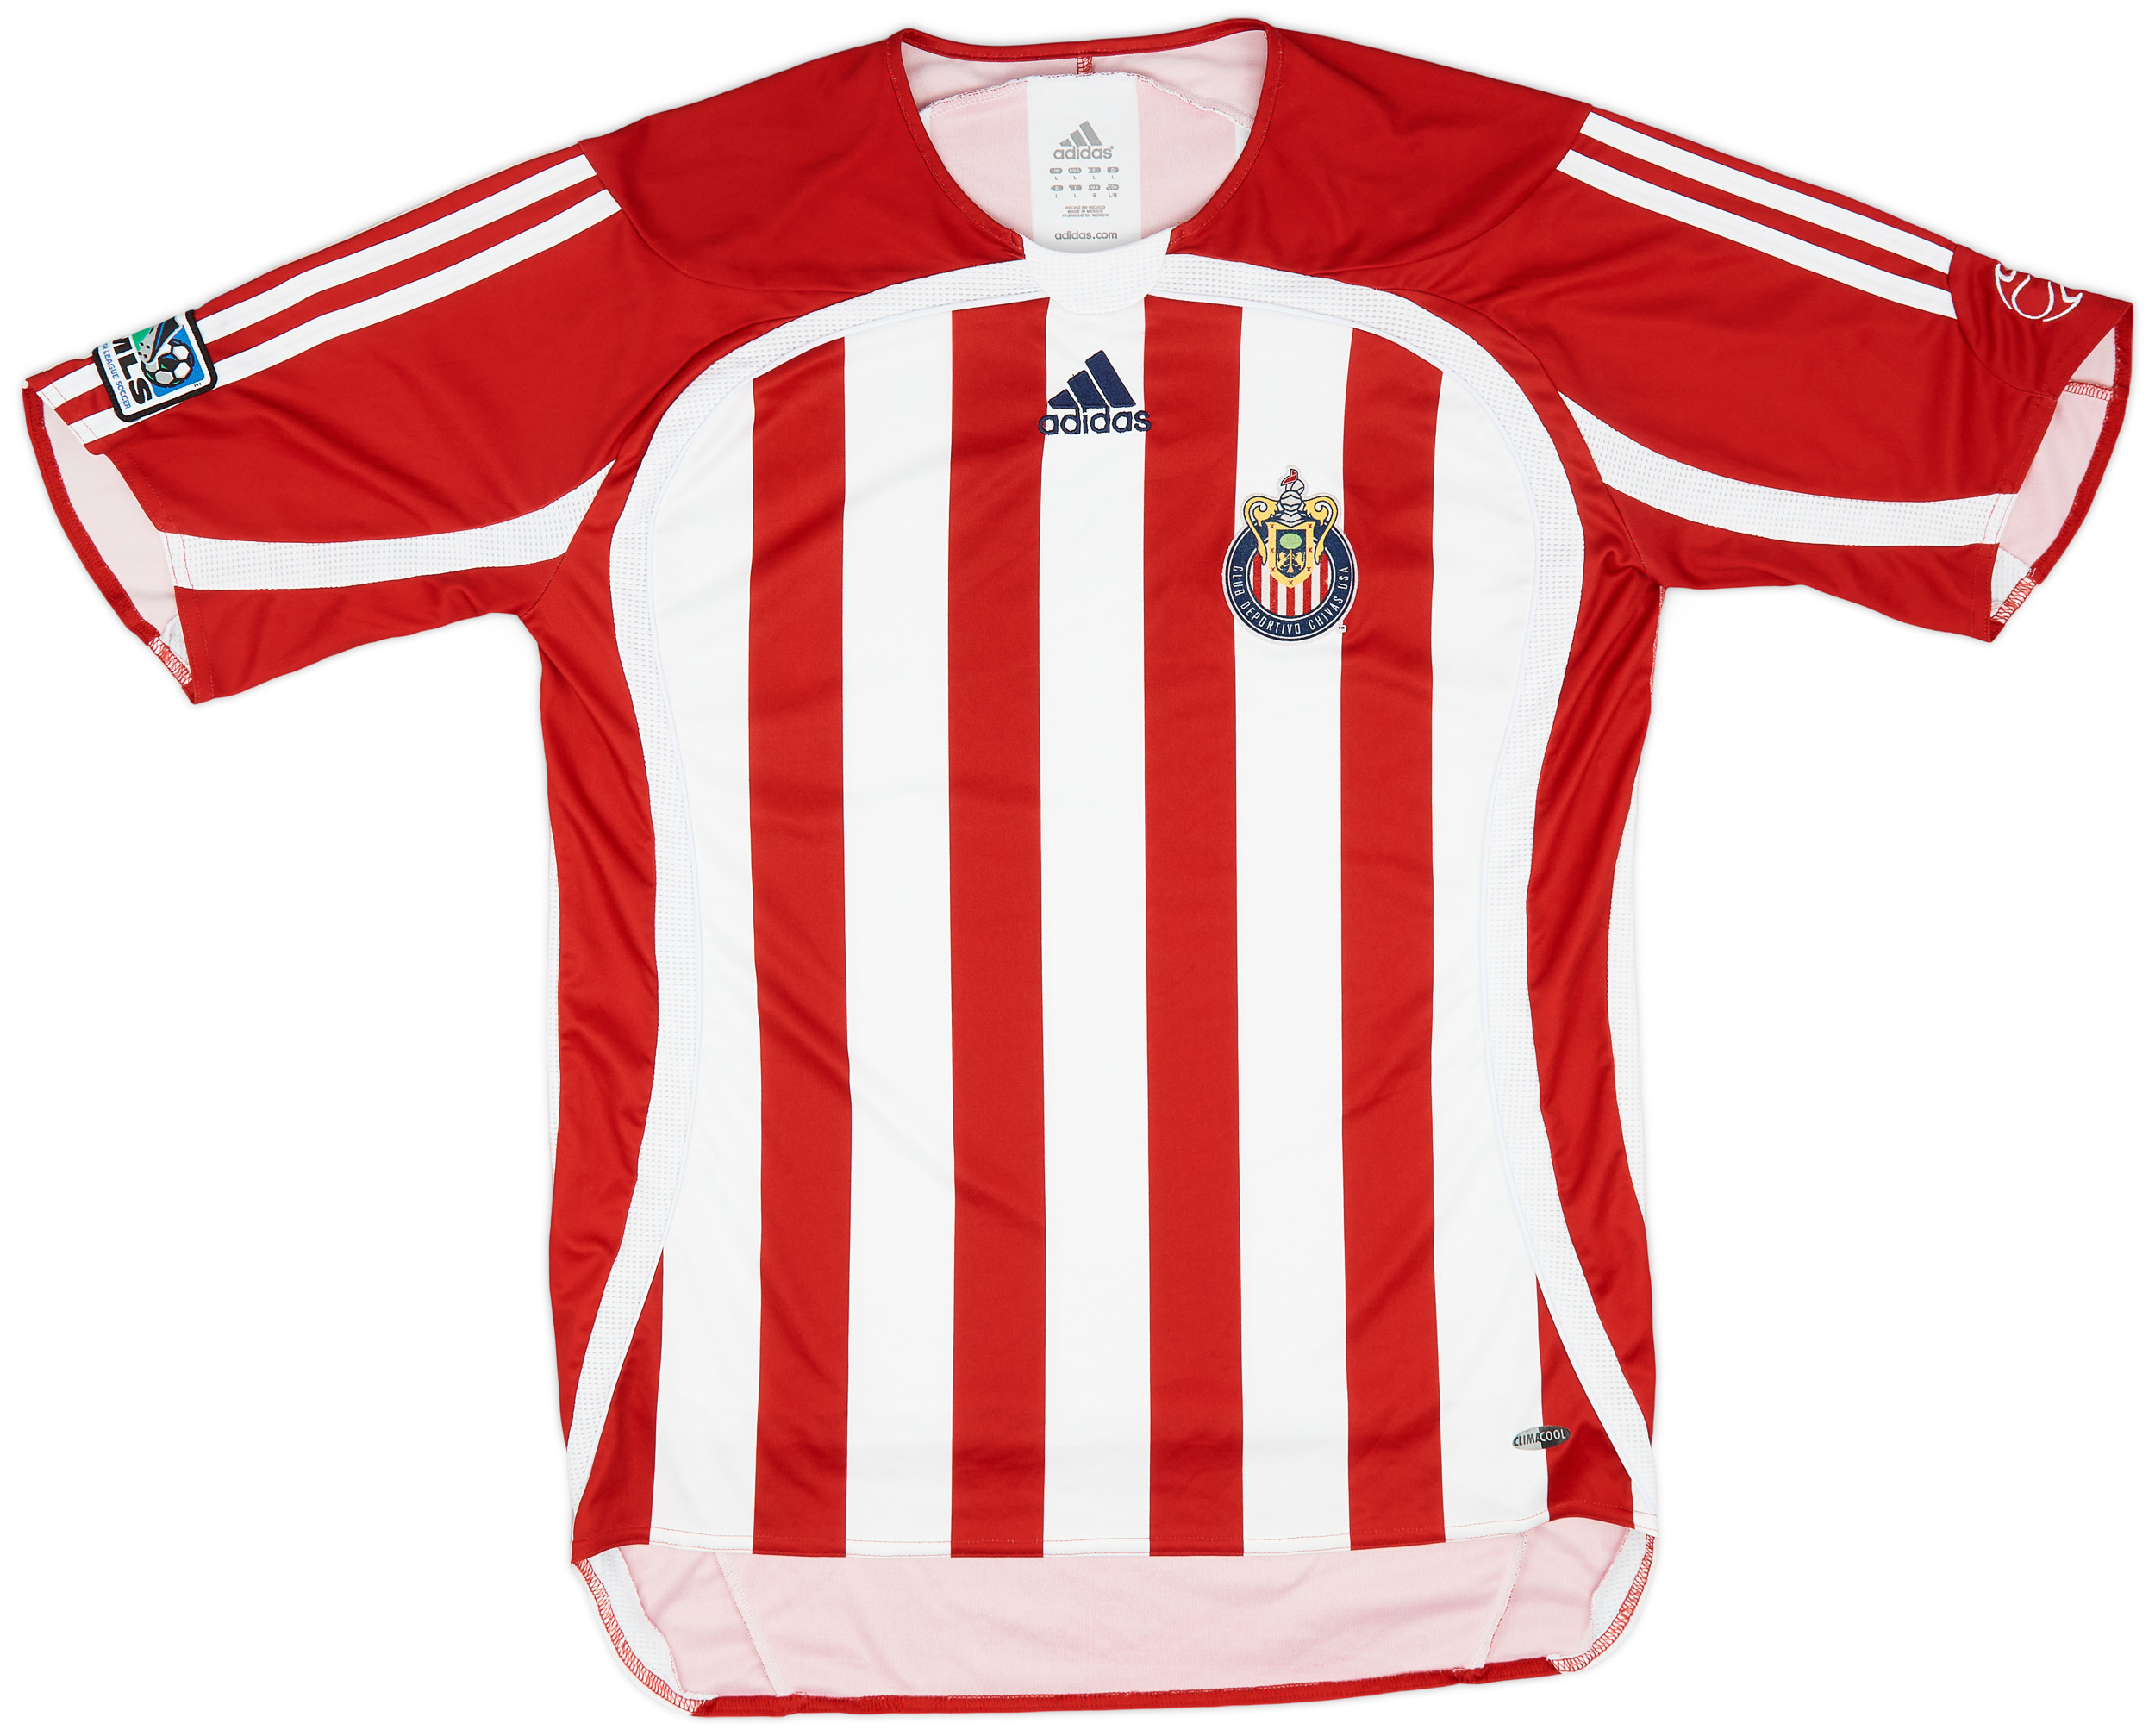 2006-07 Chivas USA Home Shirt - 9/10 - ()